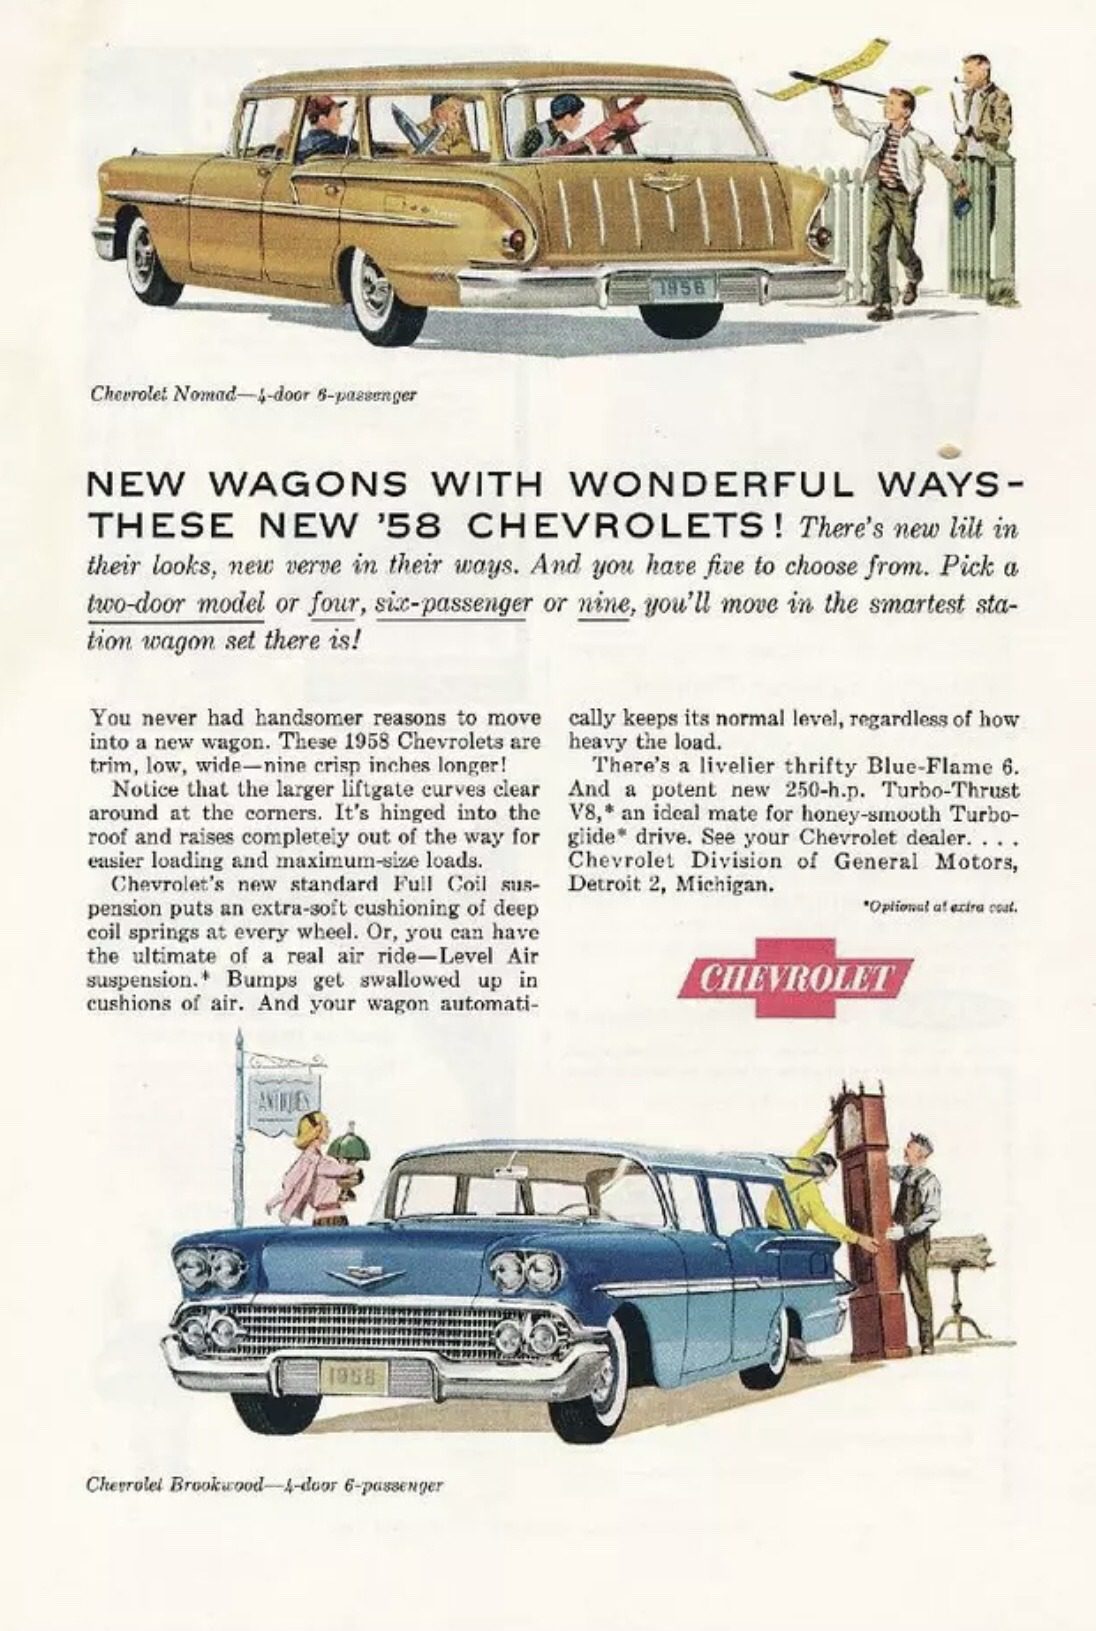 1958 Chevy Nomad wagon